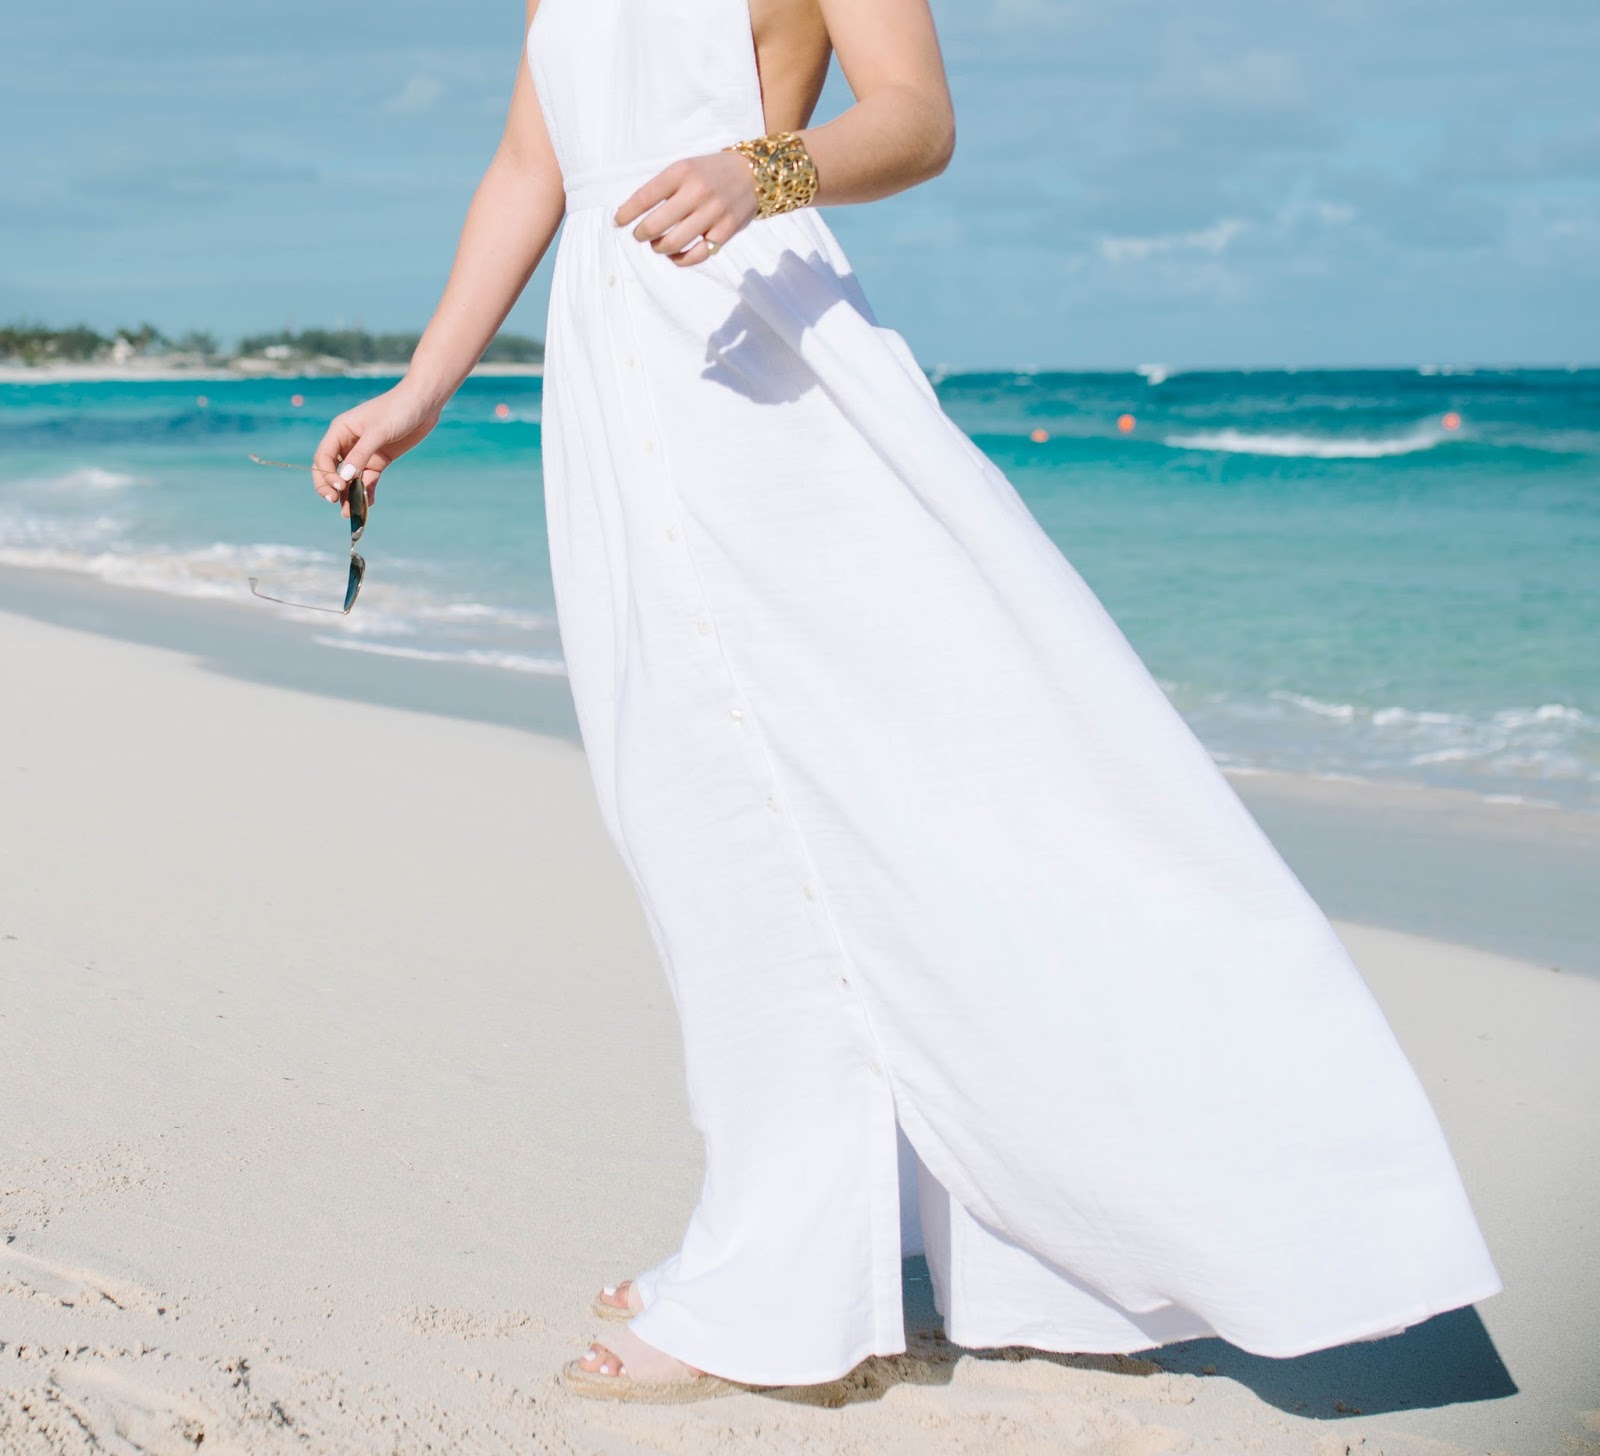 Summer Wind: Stunning White Backless Maxi Dress